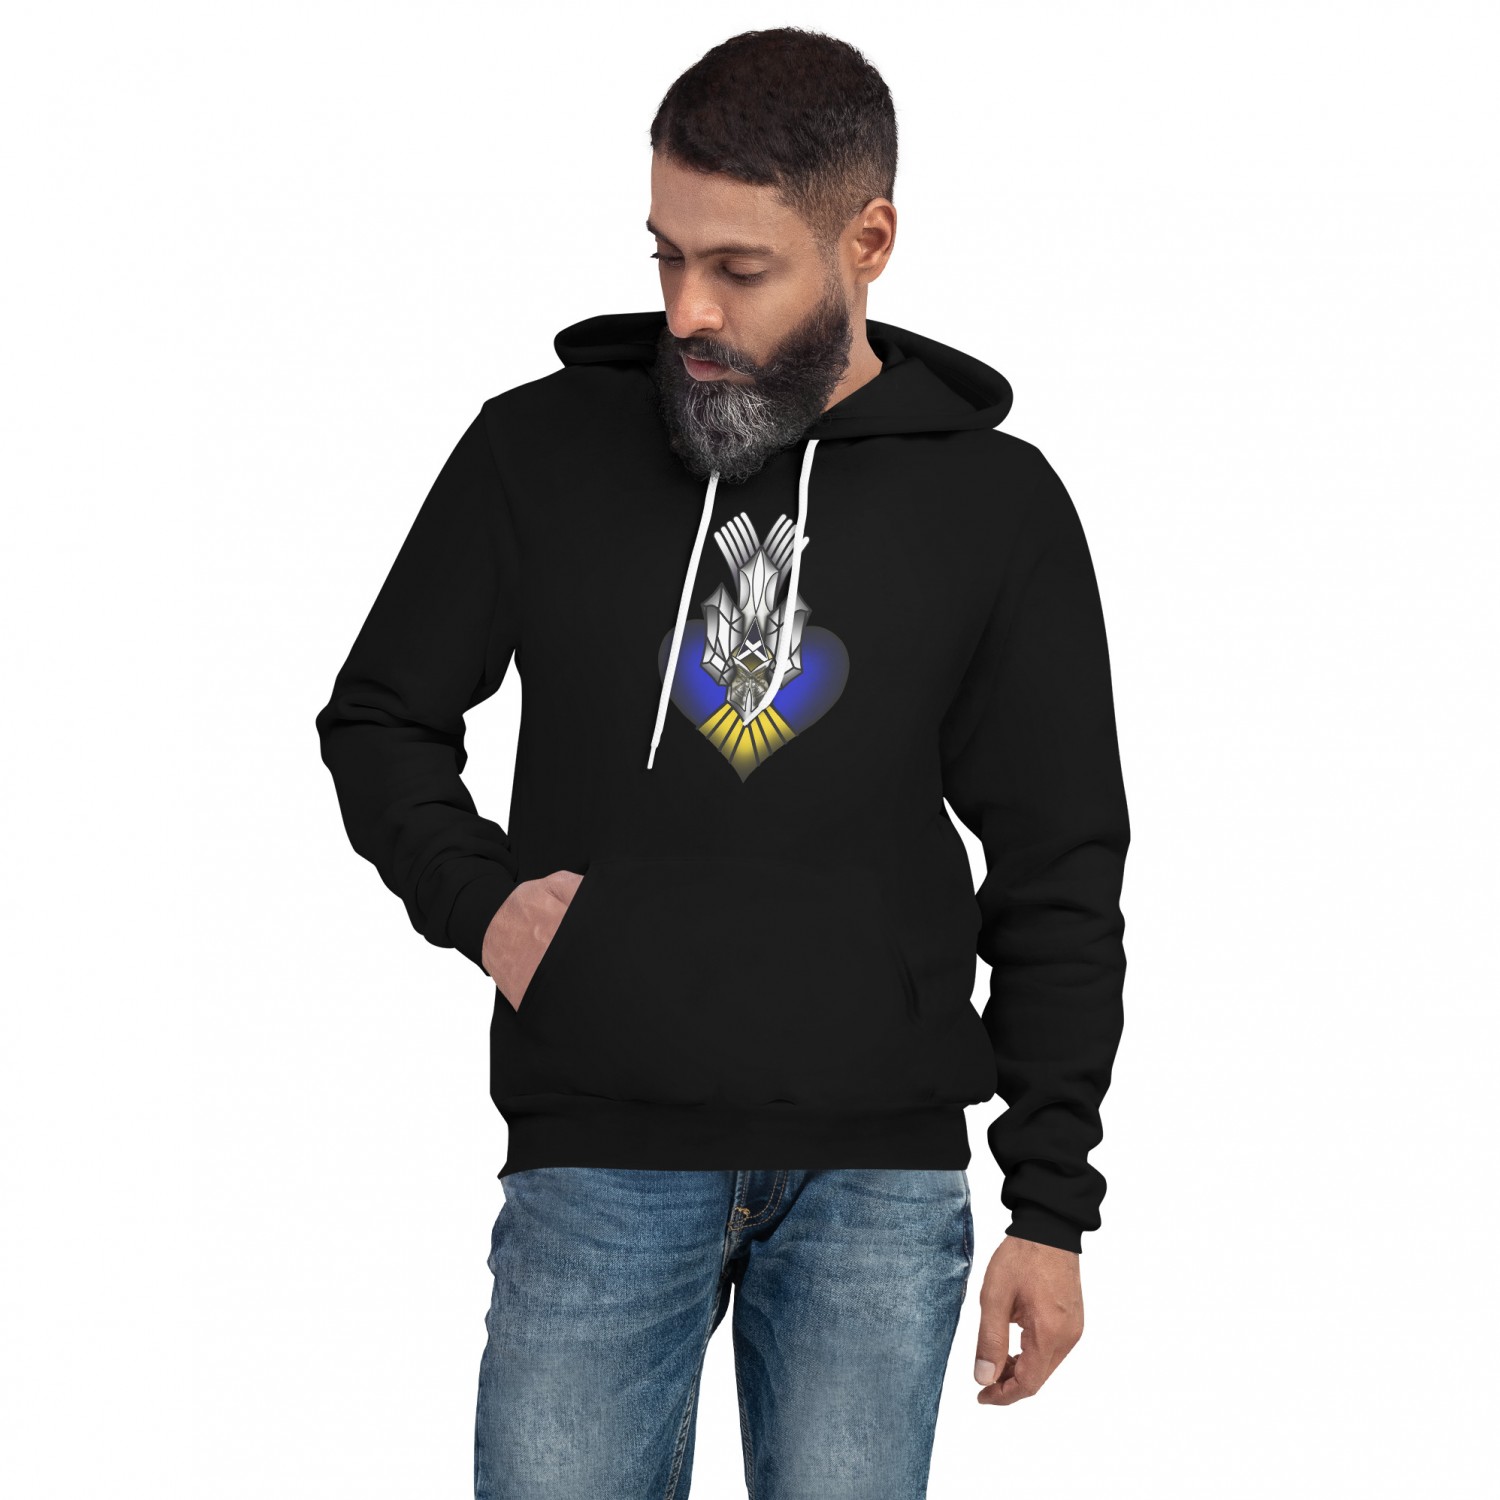 Buy a hoodie with a hood "Unbreakable"